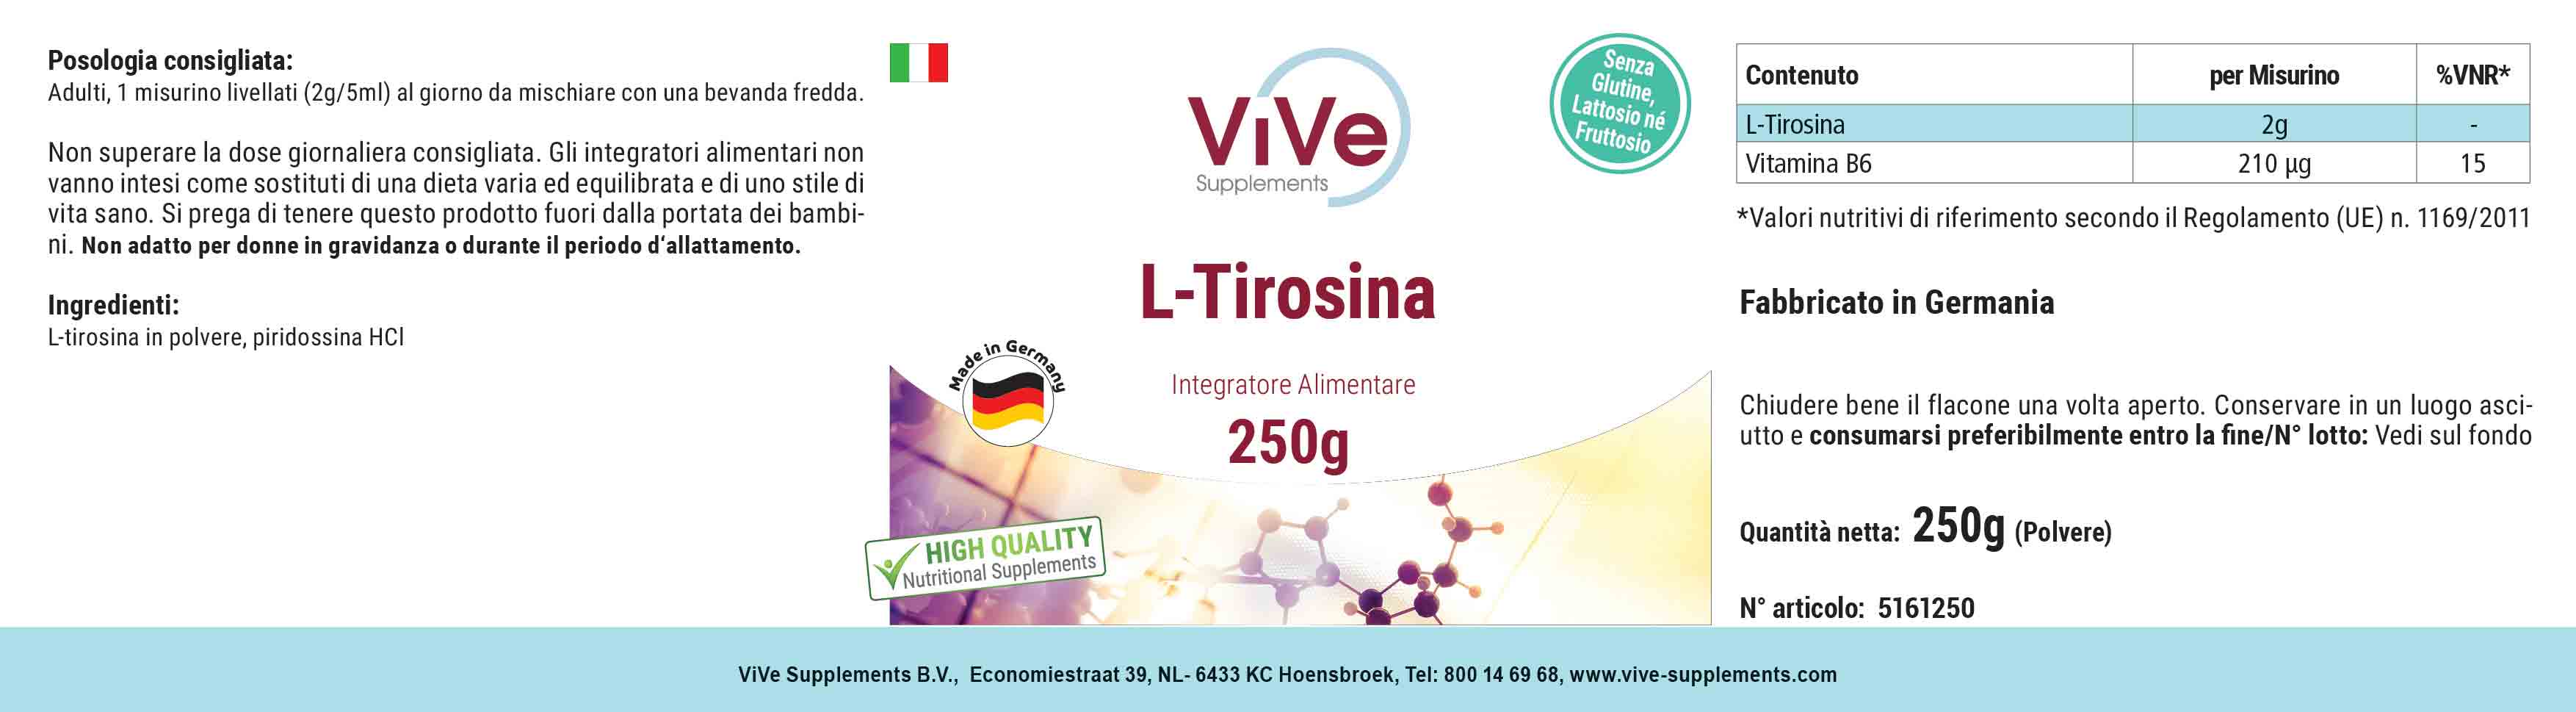 L-Tyrosine Poeder 250g + Vitamine B6